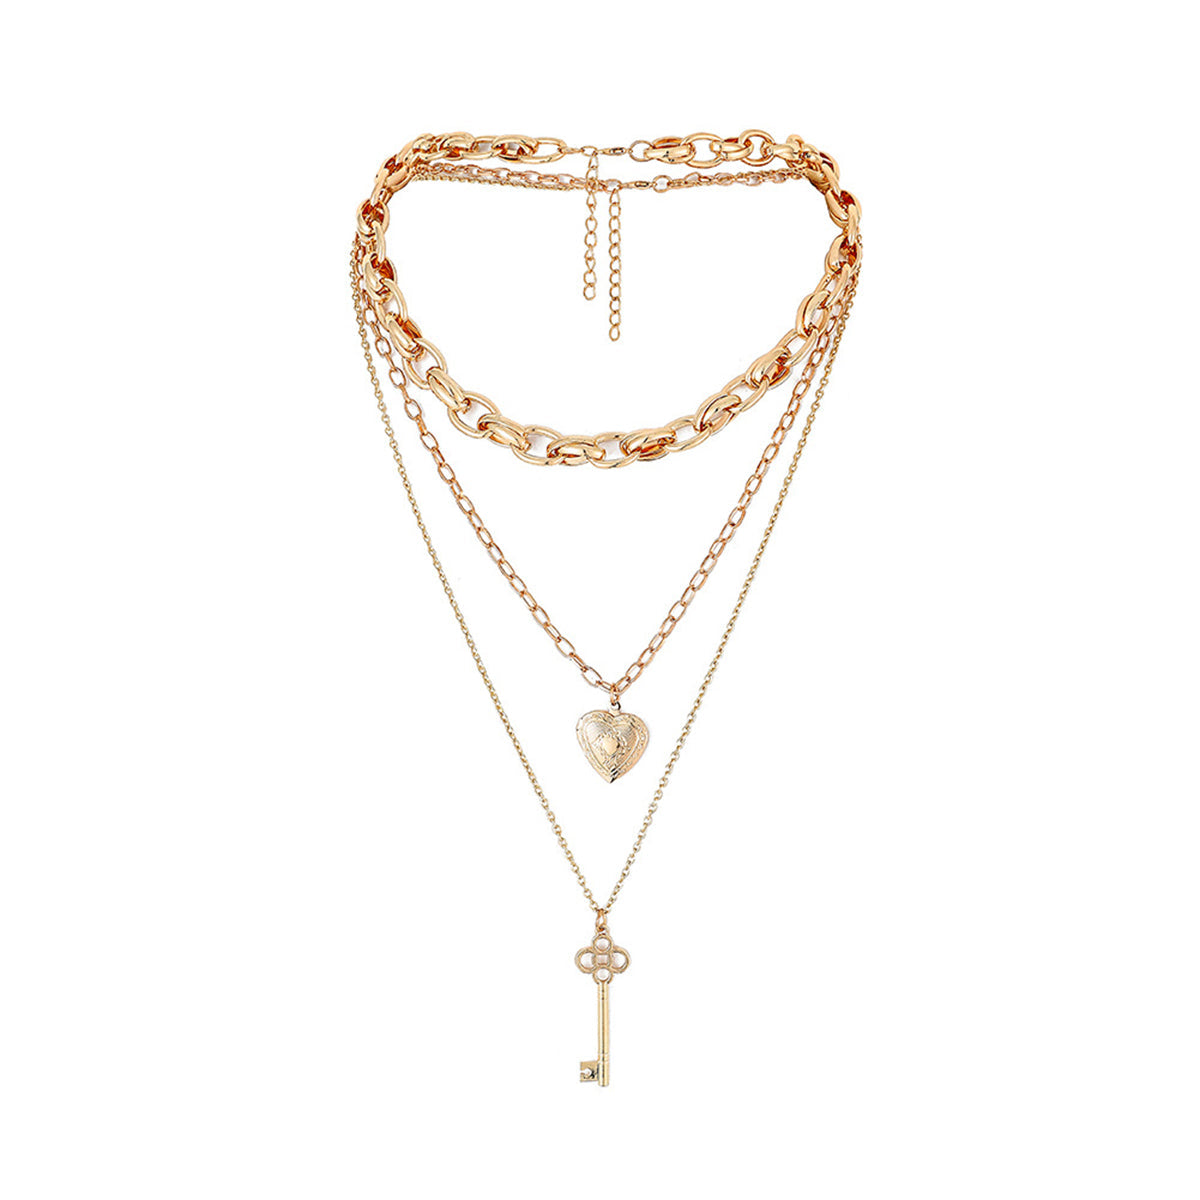 18K Gold-Plated Key & Heart Pendant Necklace Set